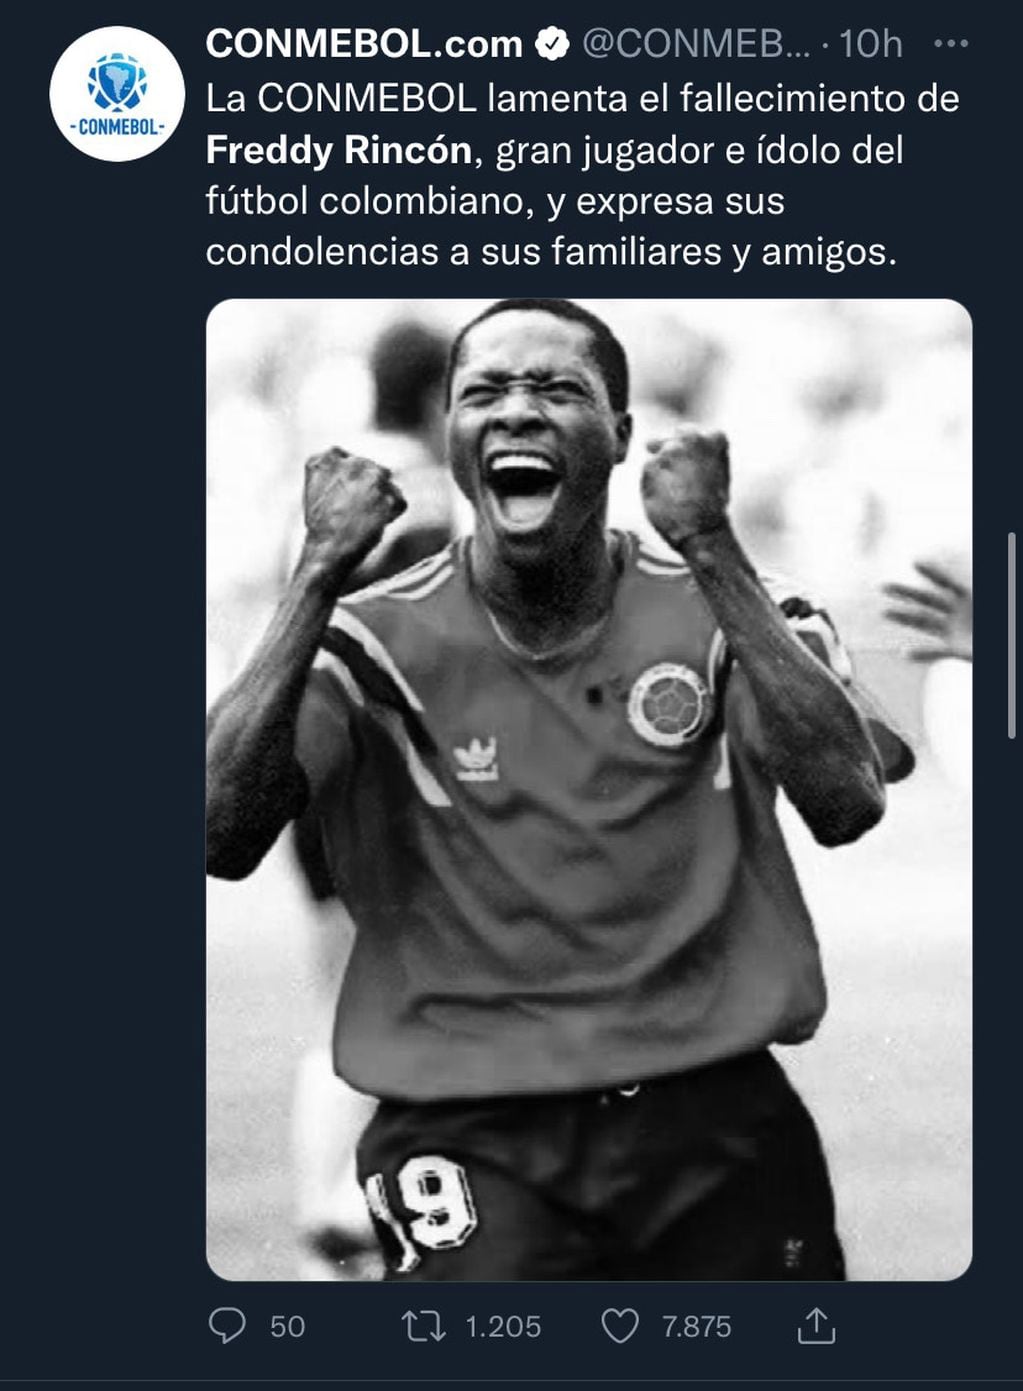 @CONMEBOL